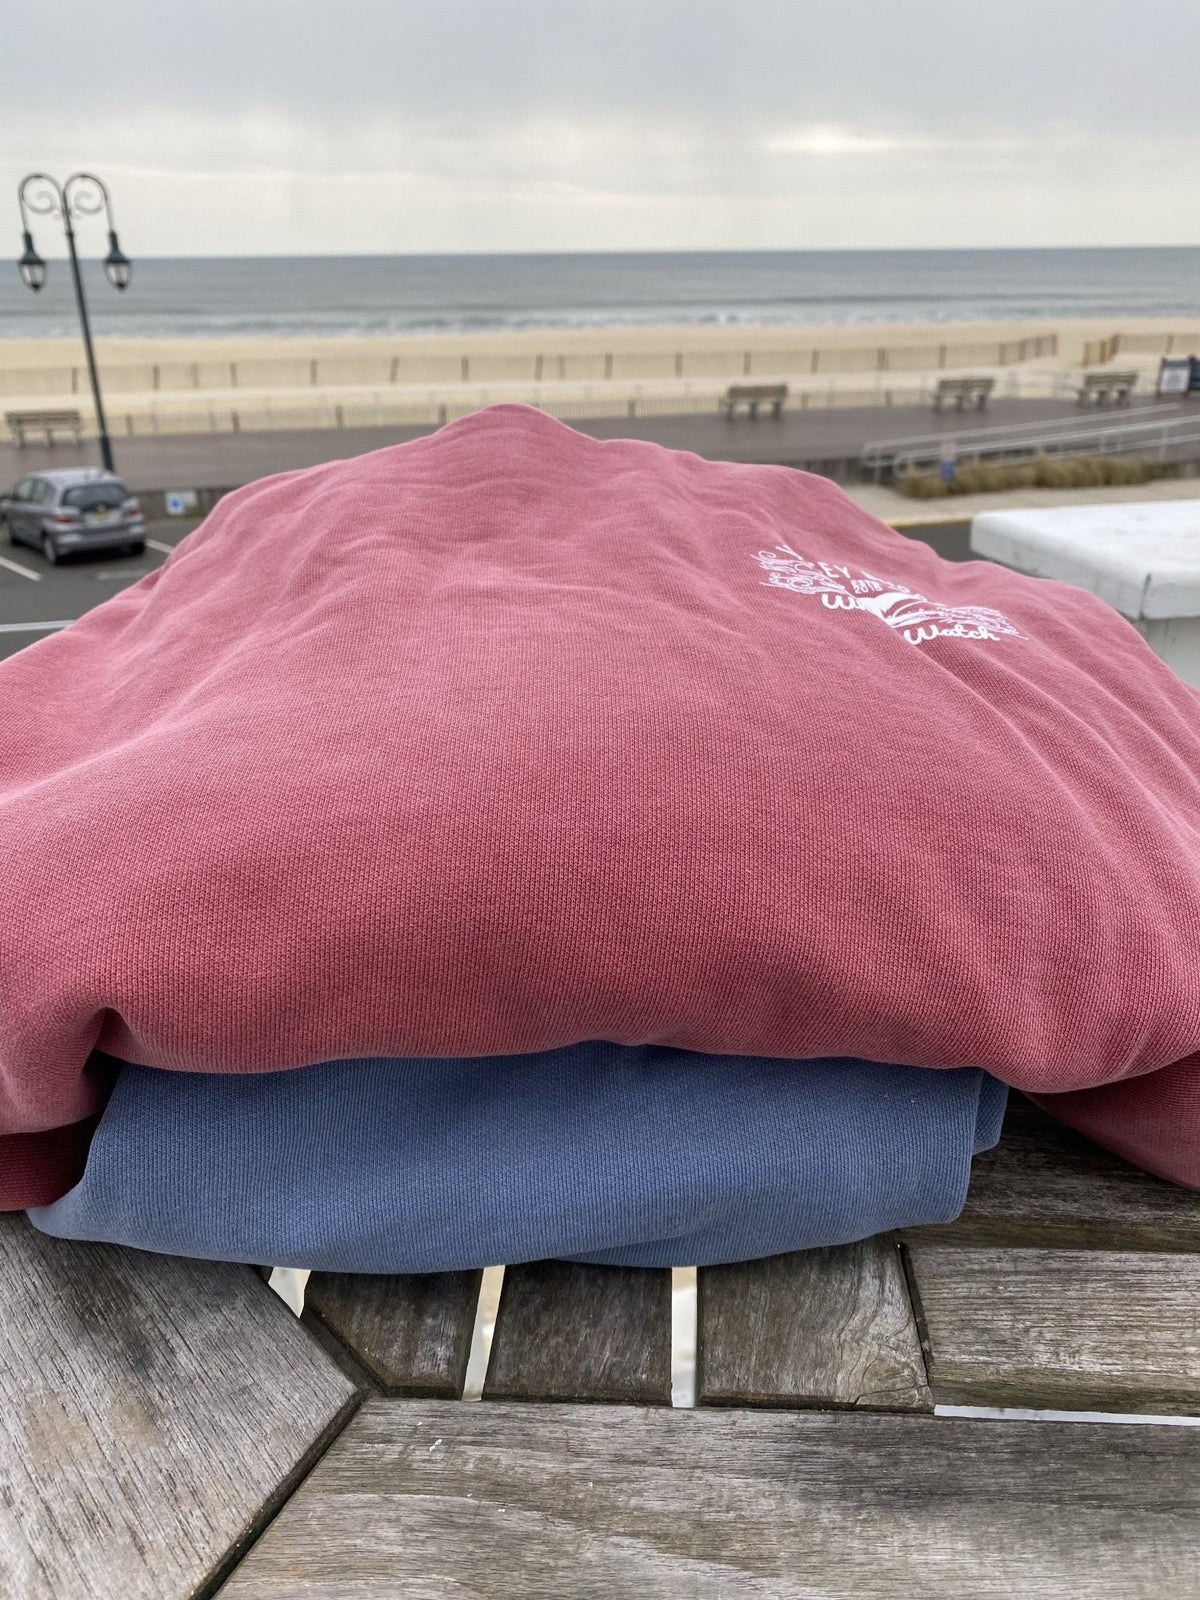 Est. 2016 Design Jersey Shore Whale Watch Heavyweight Sweatshirt printed both sides Bill McKim Photography 